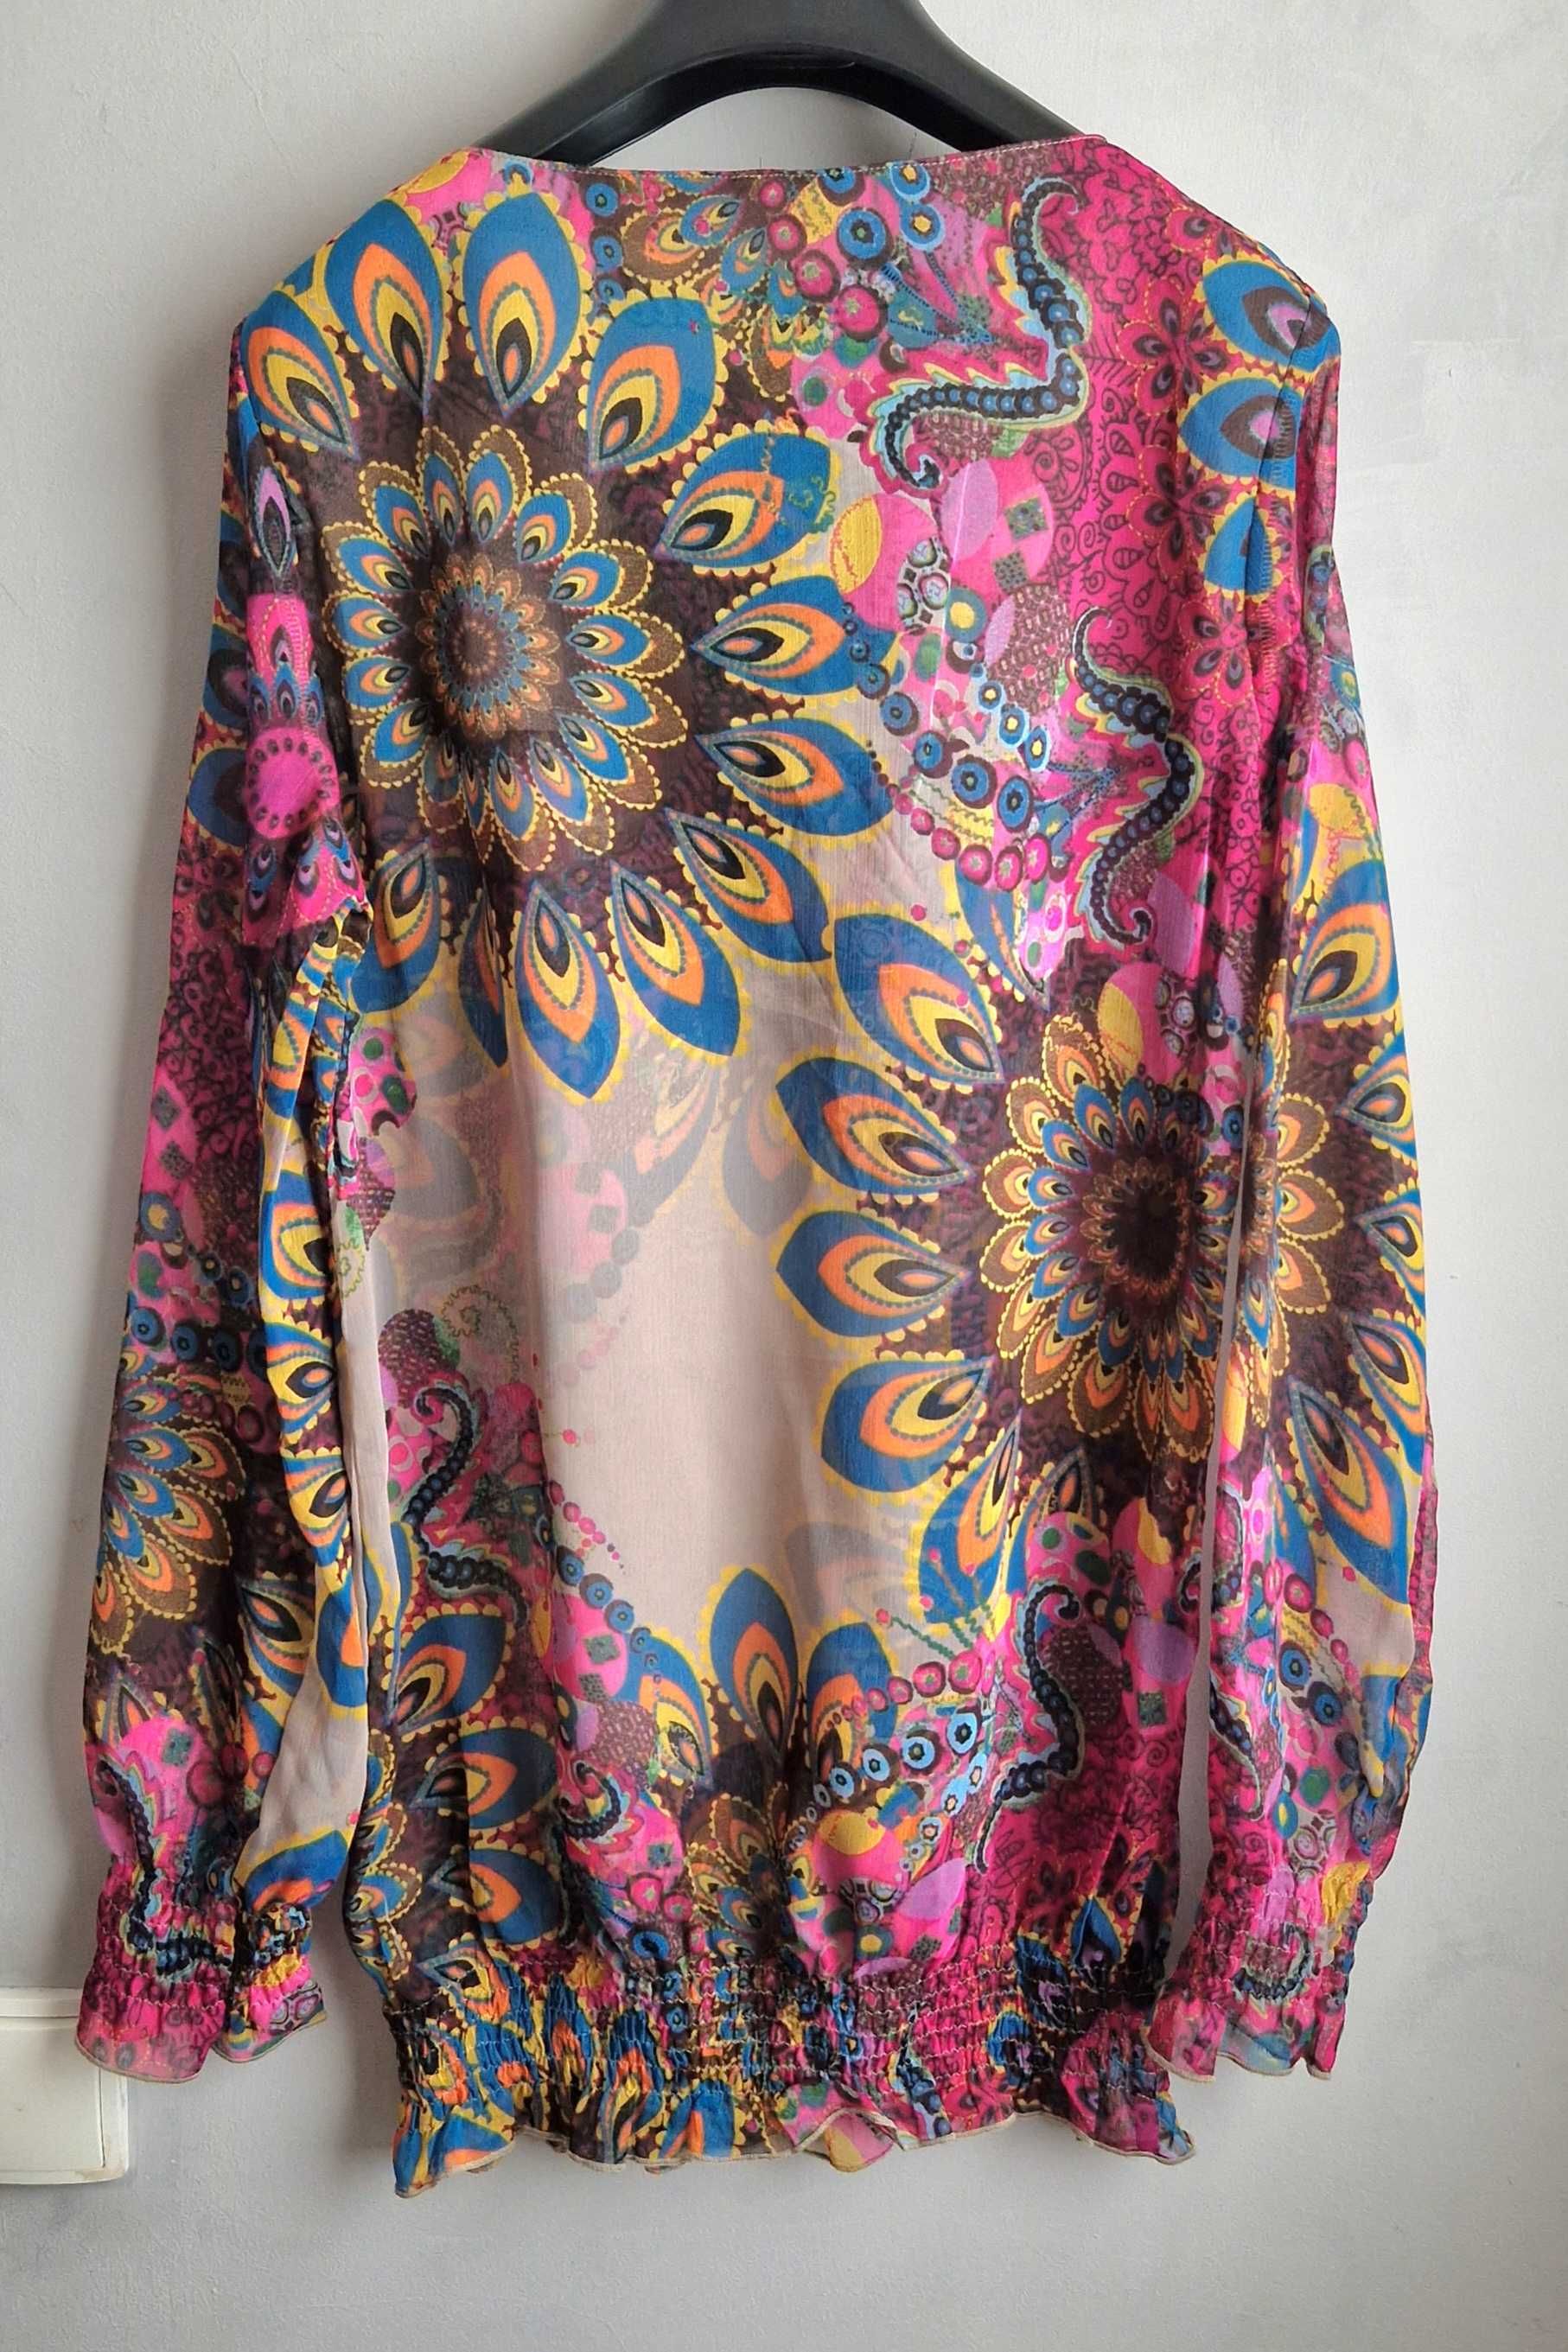 Śliczna Bluzka tunika mgiełka mesh DESIGUAL multicolor  boho 36 S